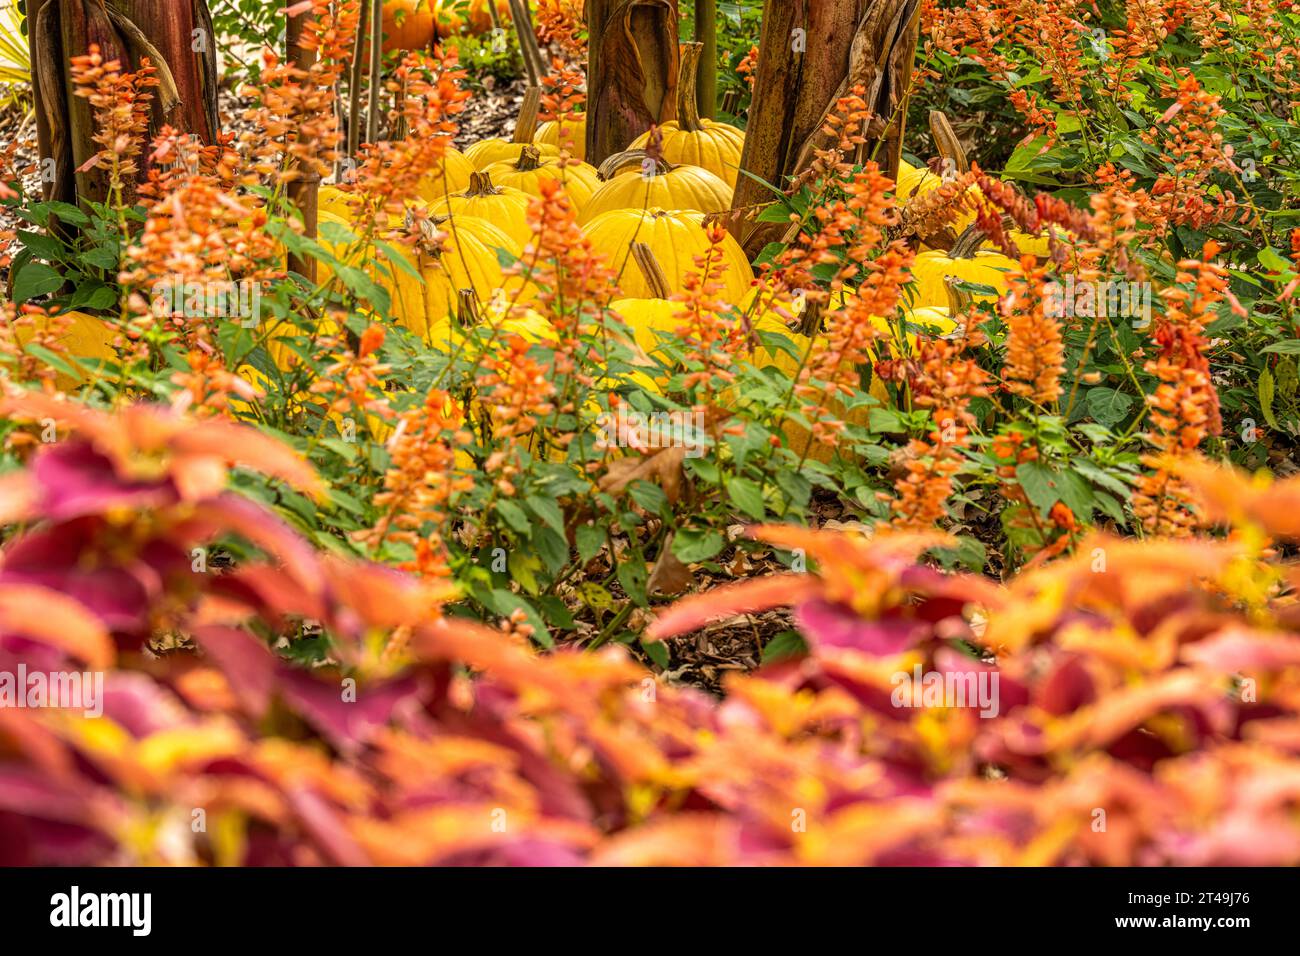 Colorful autumn garden display with bright yellow pumpkins at the Atlanta Botanical Garden in Midtown Atlanta, Georgia. (USA) Stock Photo